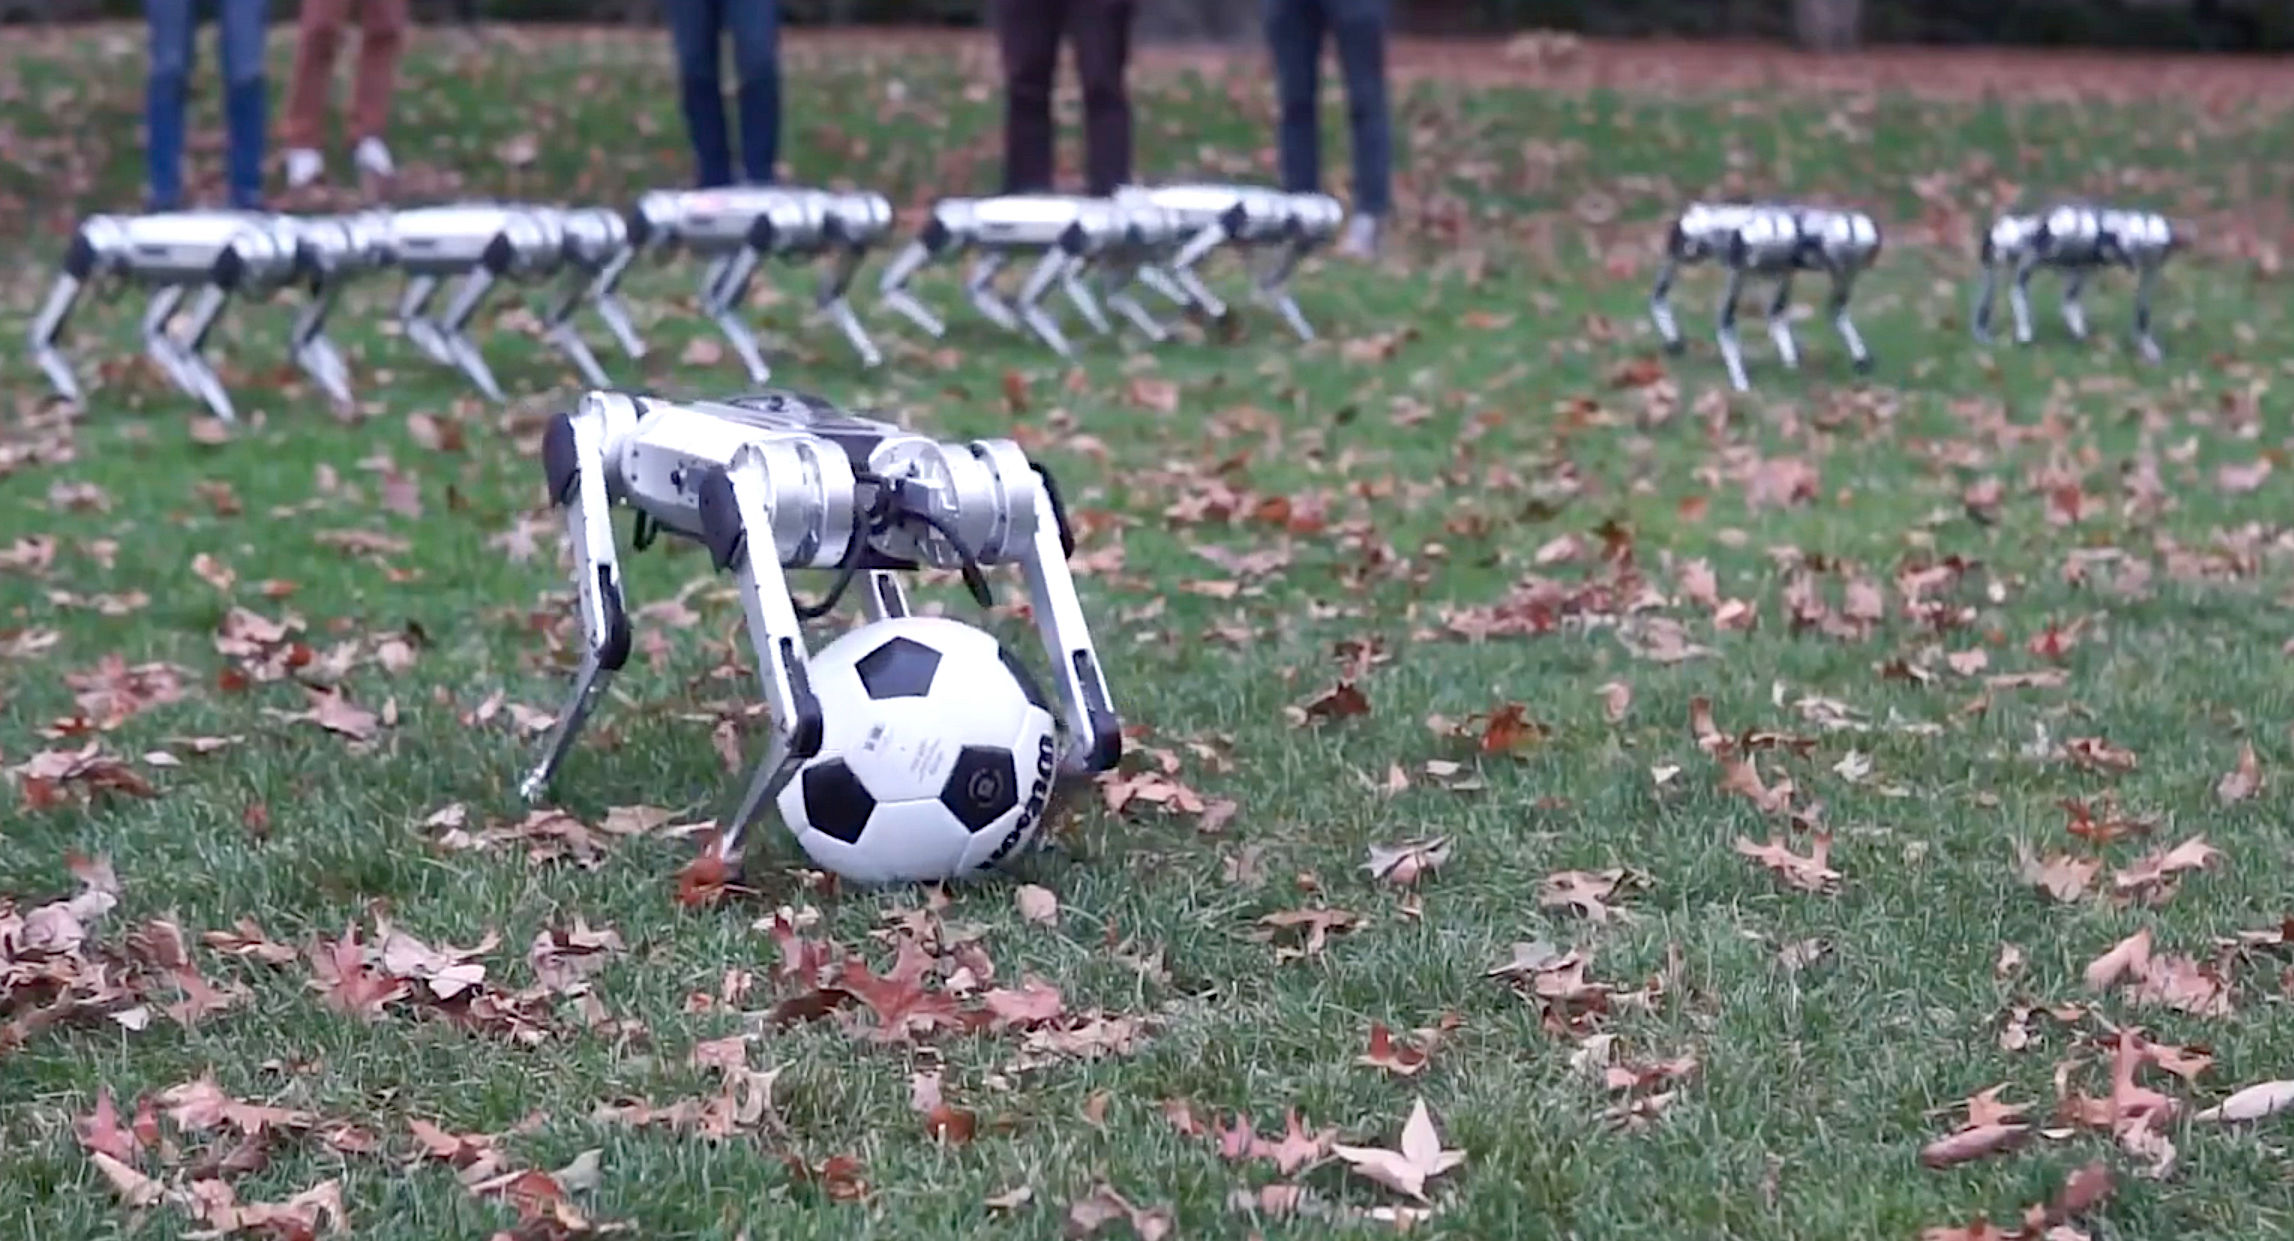 MIT Mini Cheetah Robots play soccer